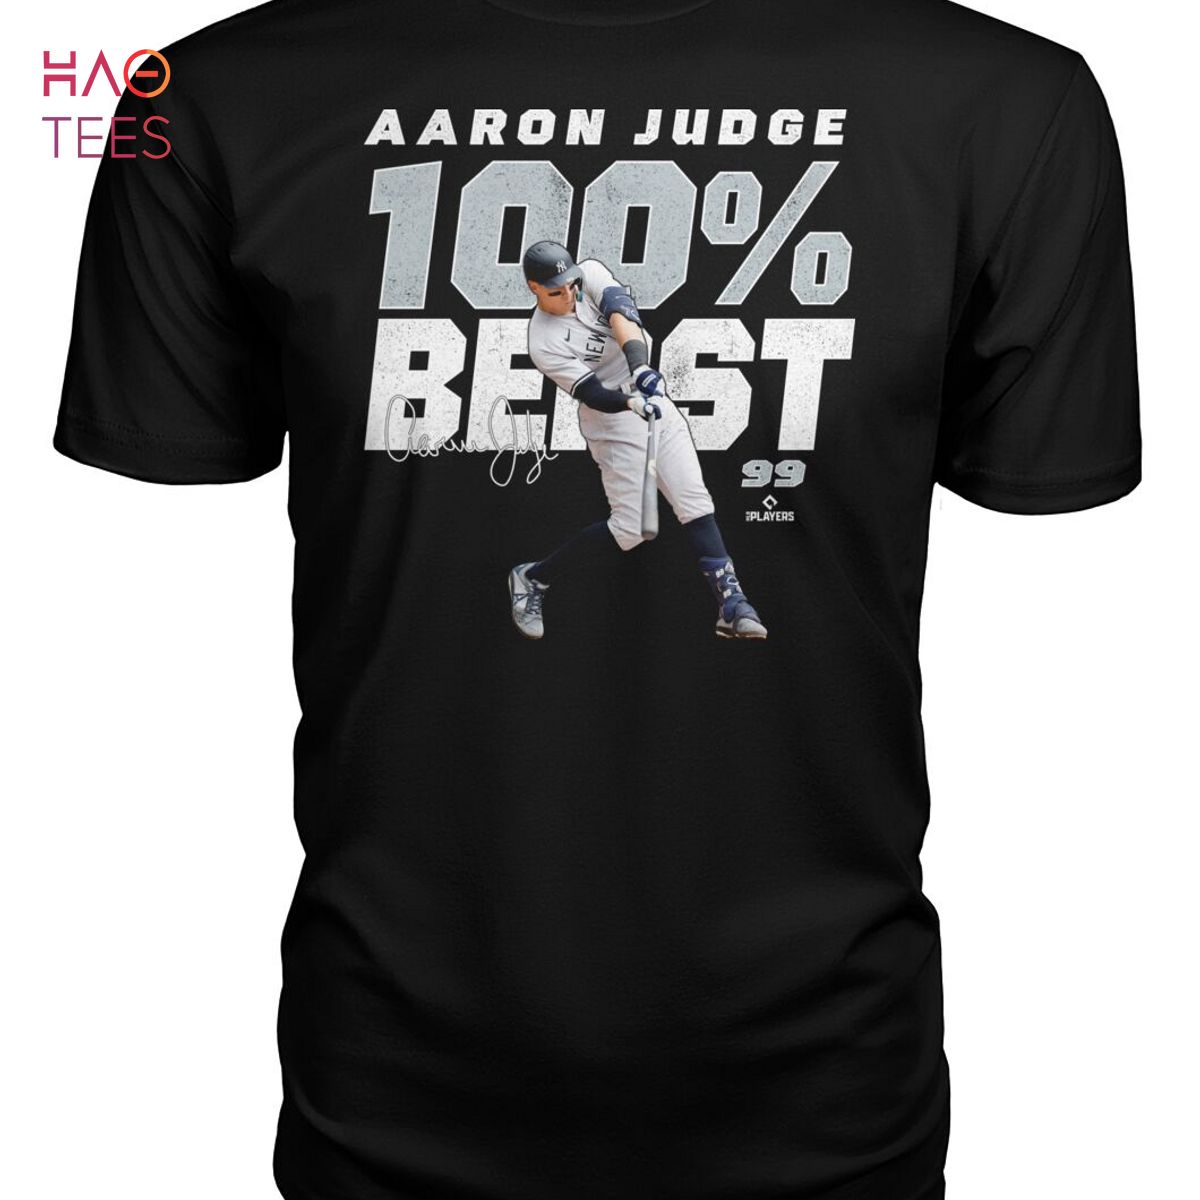 Asron Judge Shirt Limited Edition